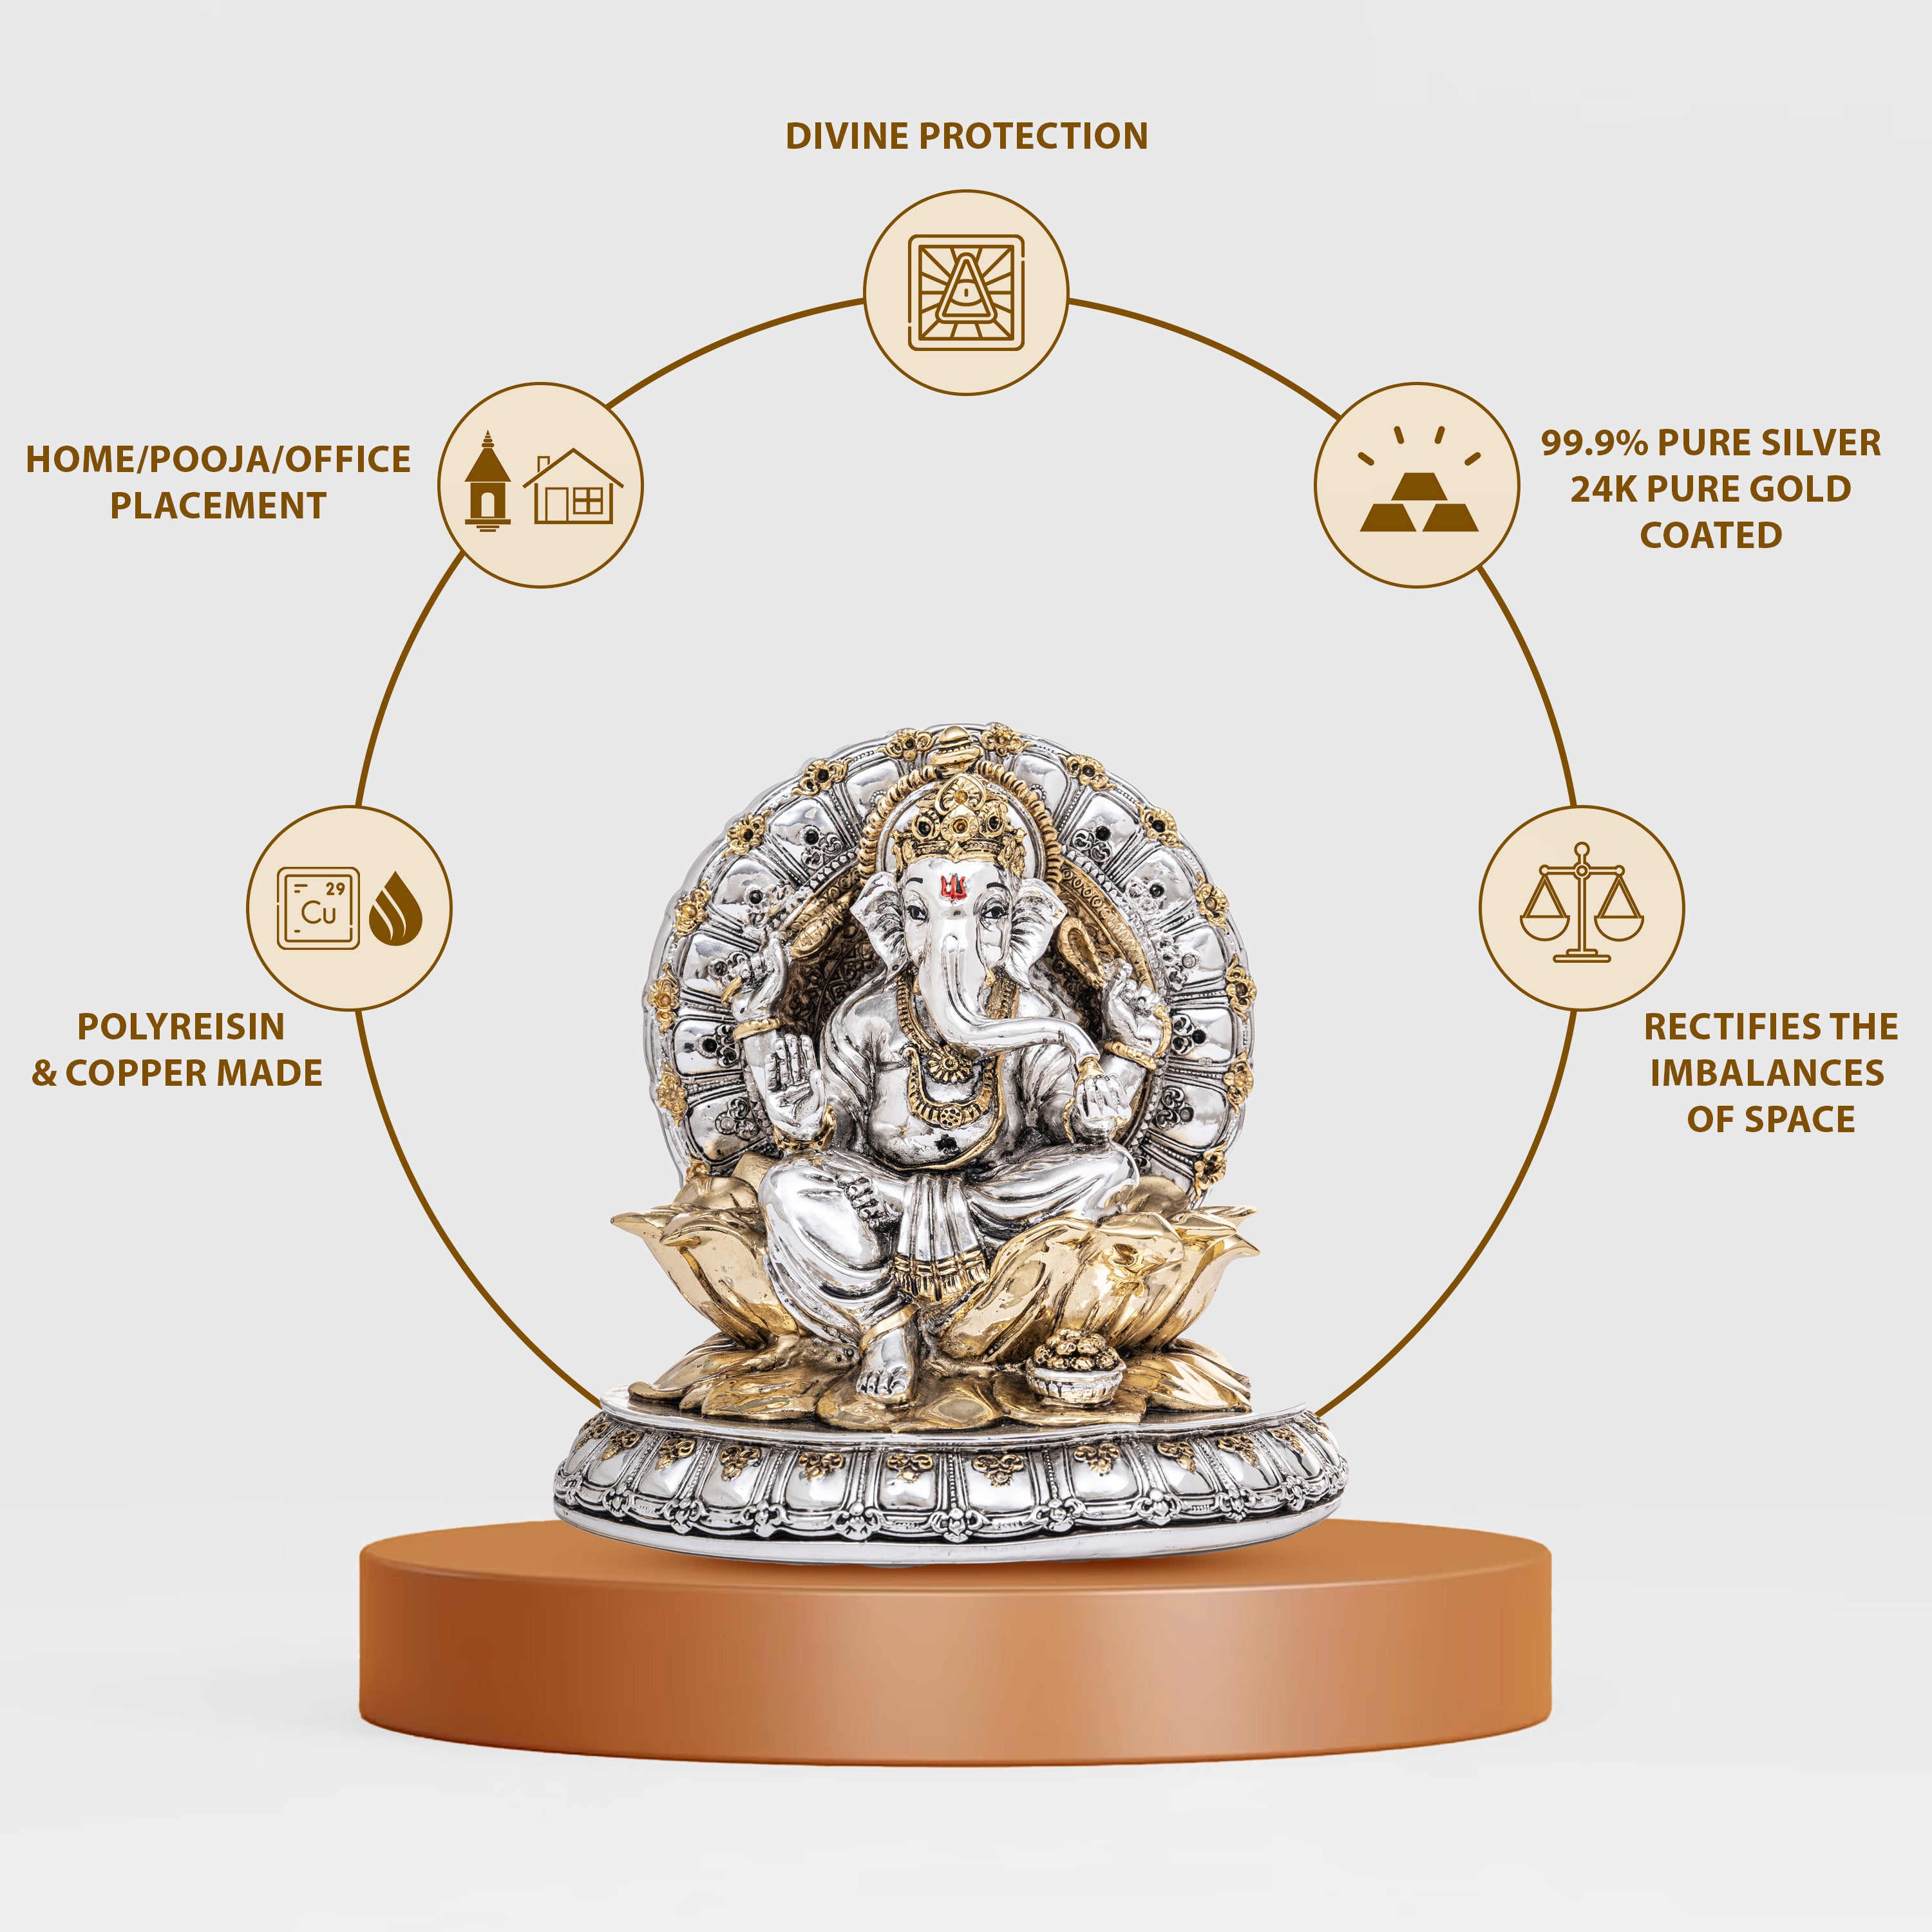 24 Carat Gold and 999 Silver Coated Ganesha Idol